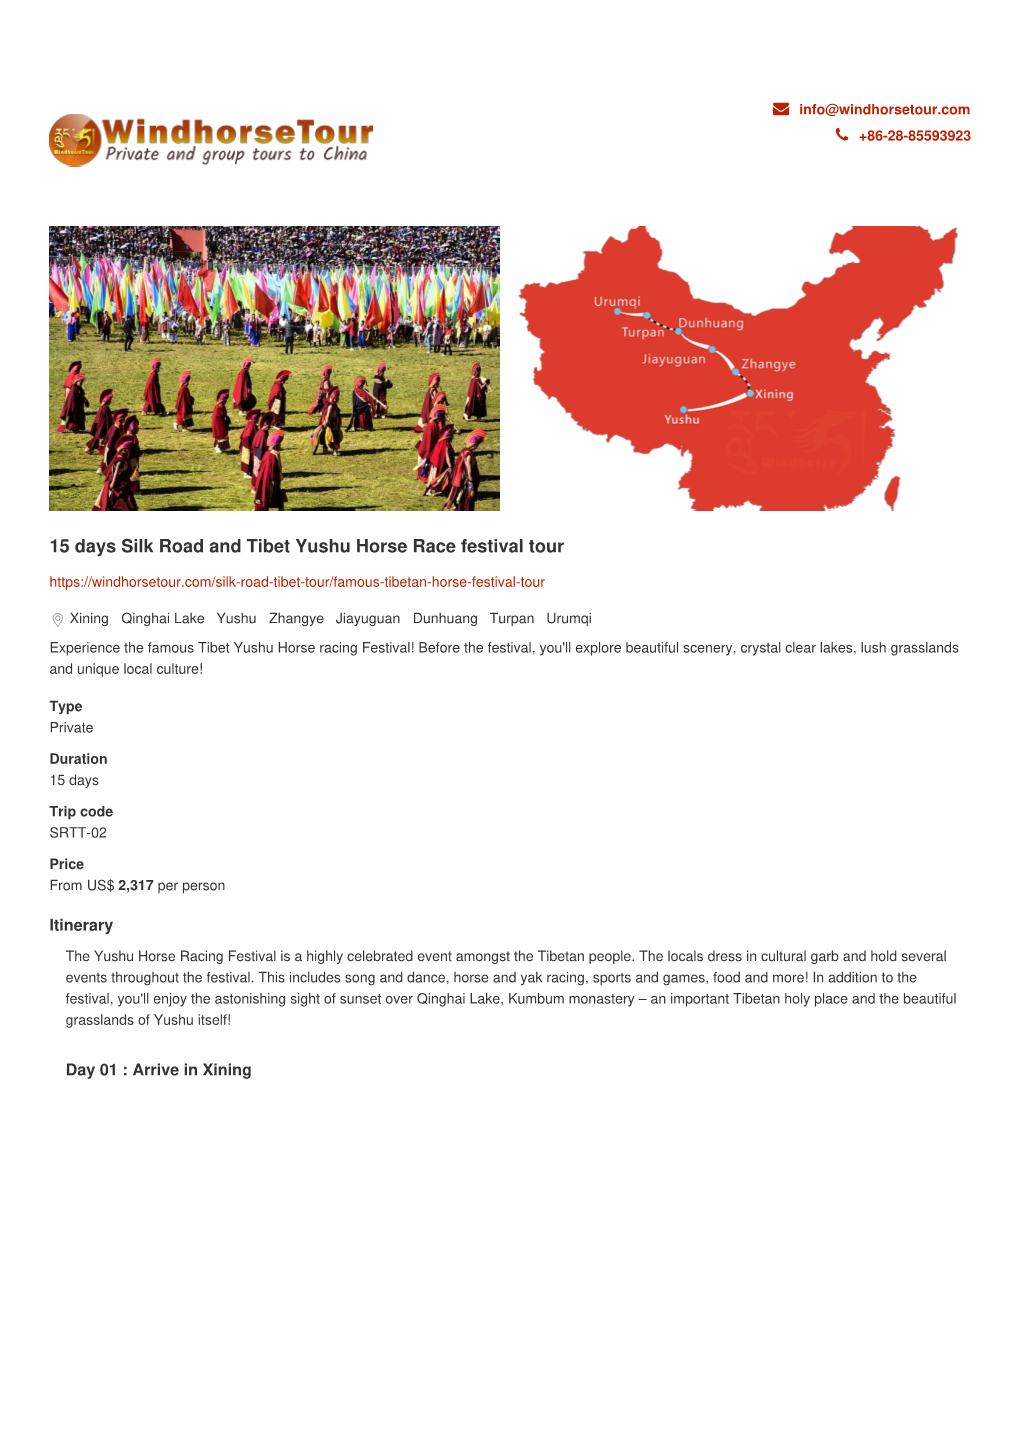 15 Days Silk Road and Tibet Yushu Horse Race Festival Tour